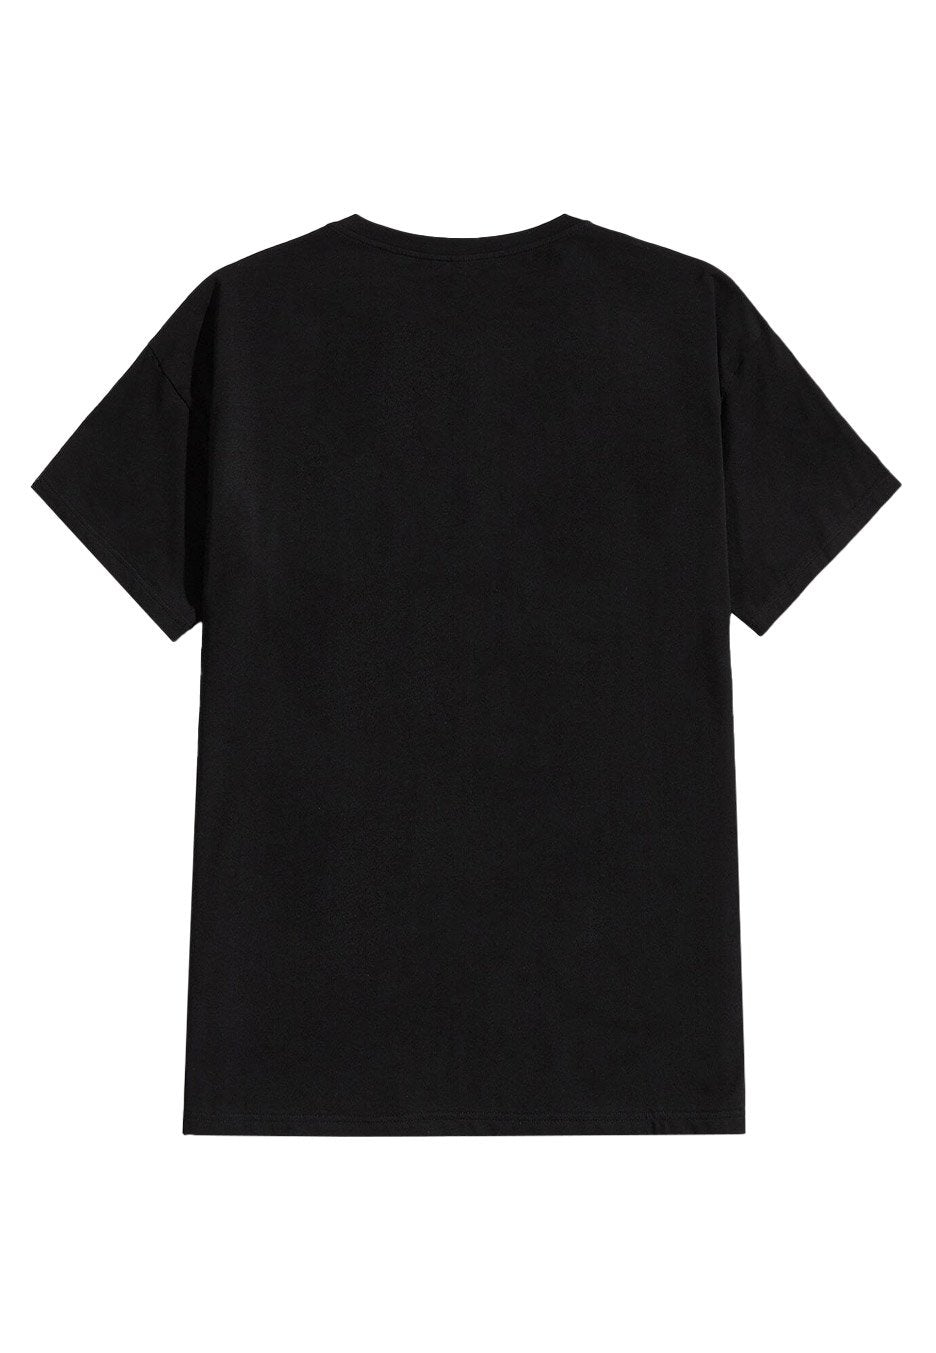 Emmure - Seance - T-Shirt